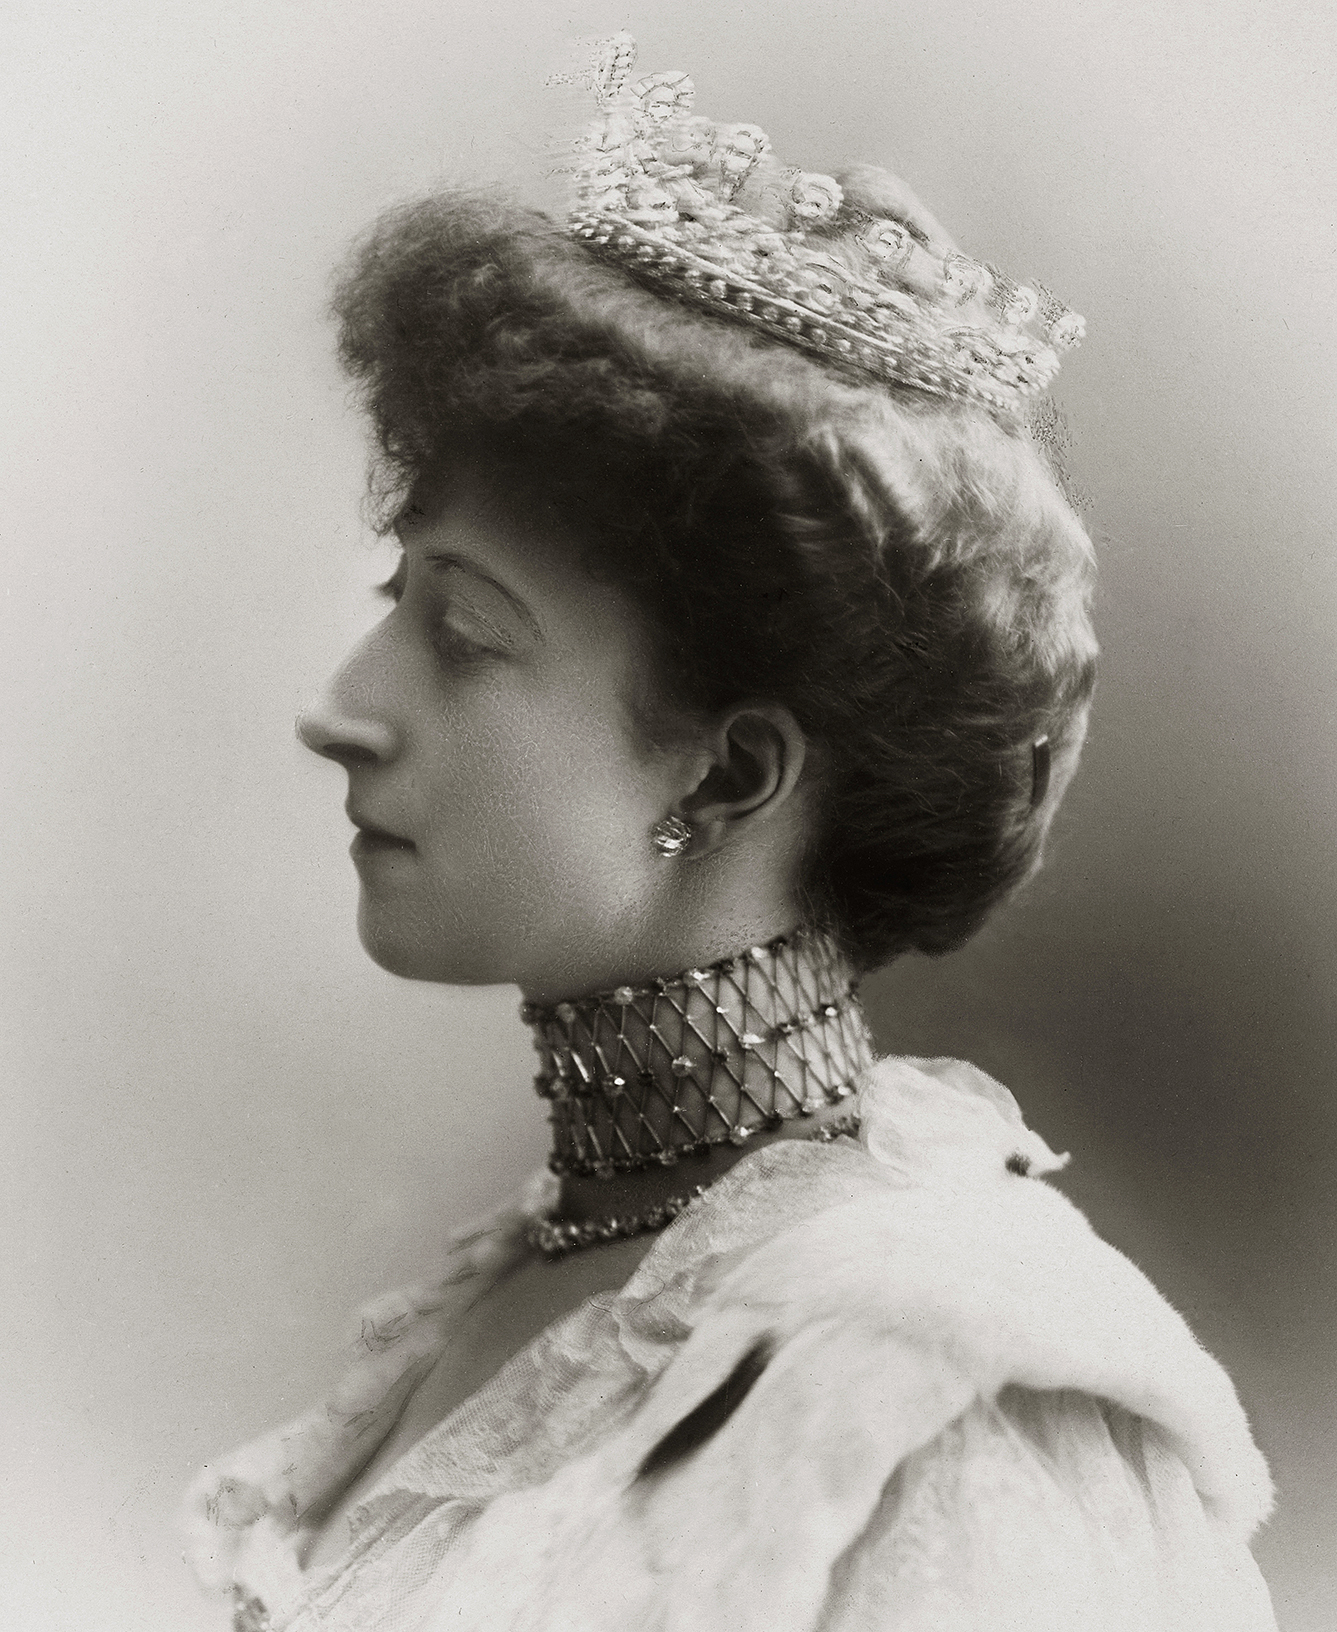 Dronning Maud 1906. Foto: De kongelige samlinger